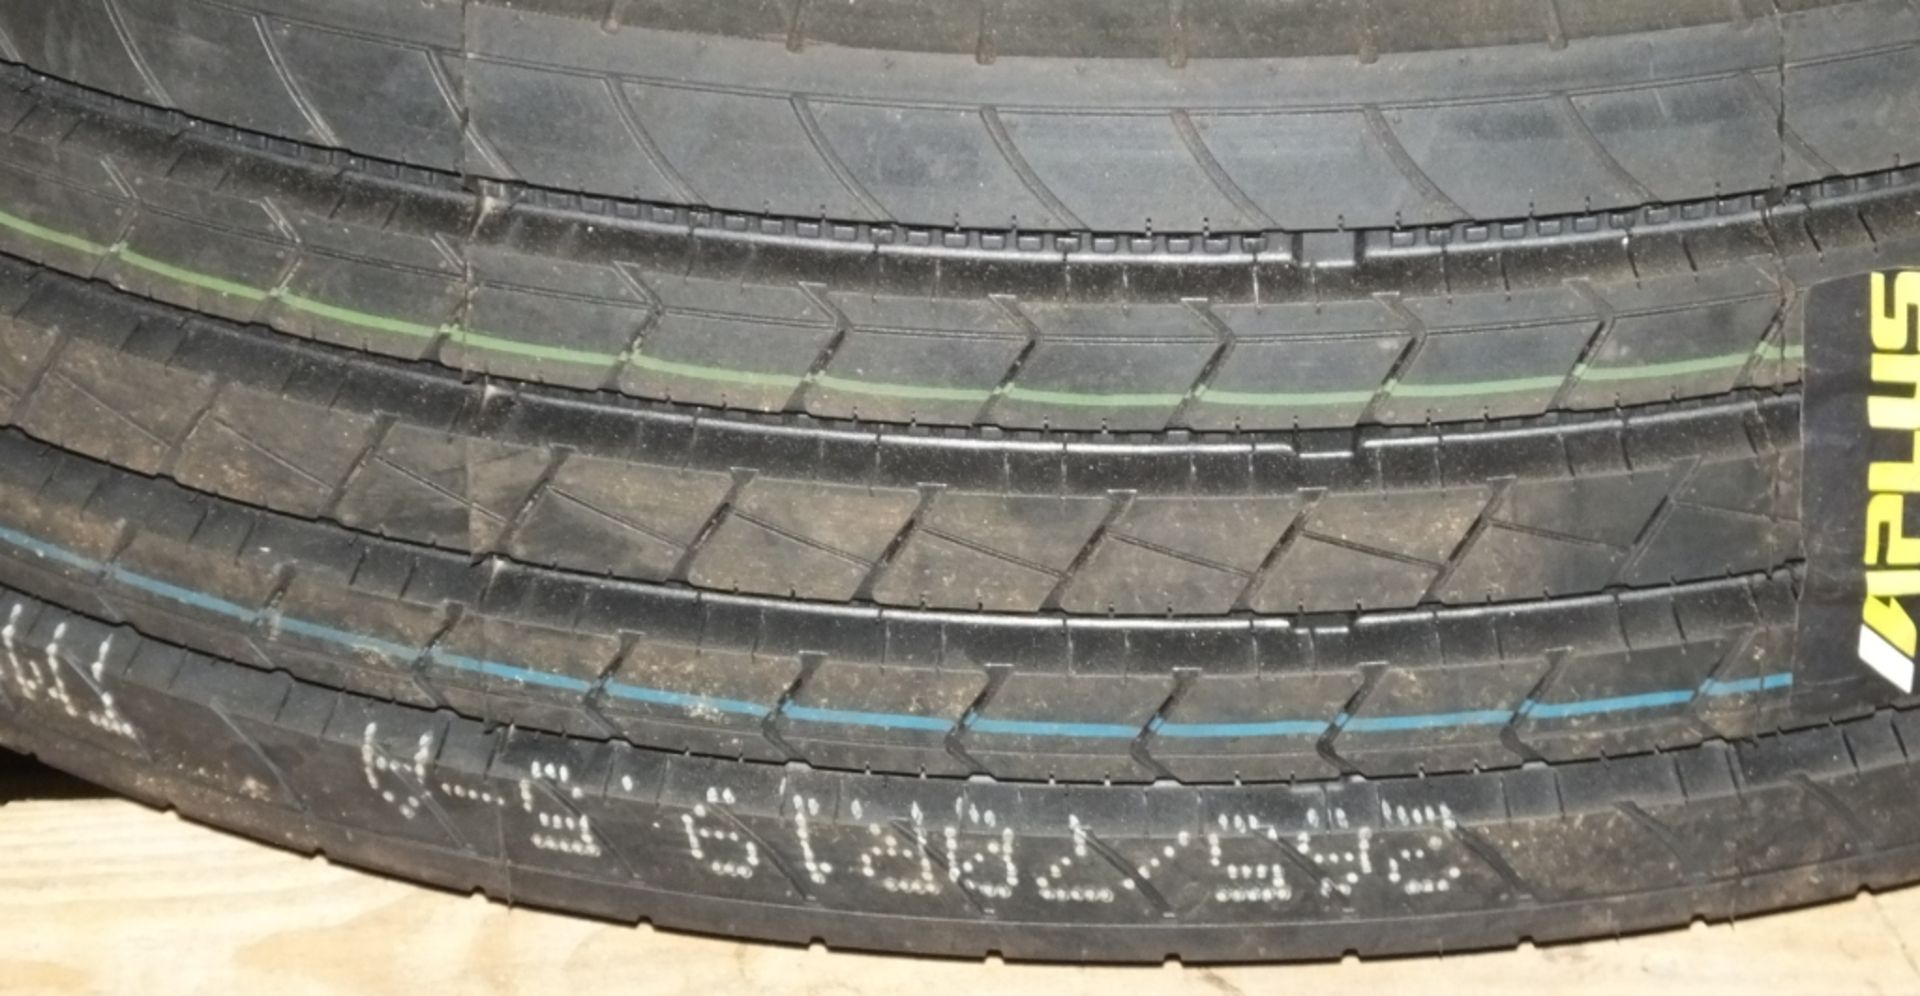 Barum BF 200 Road tire - 385/55 R 22.5 (new & unused) - Image 7 of 7